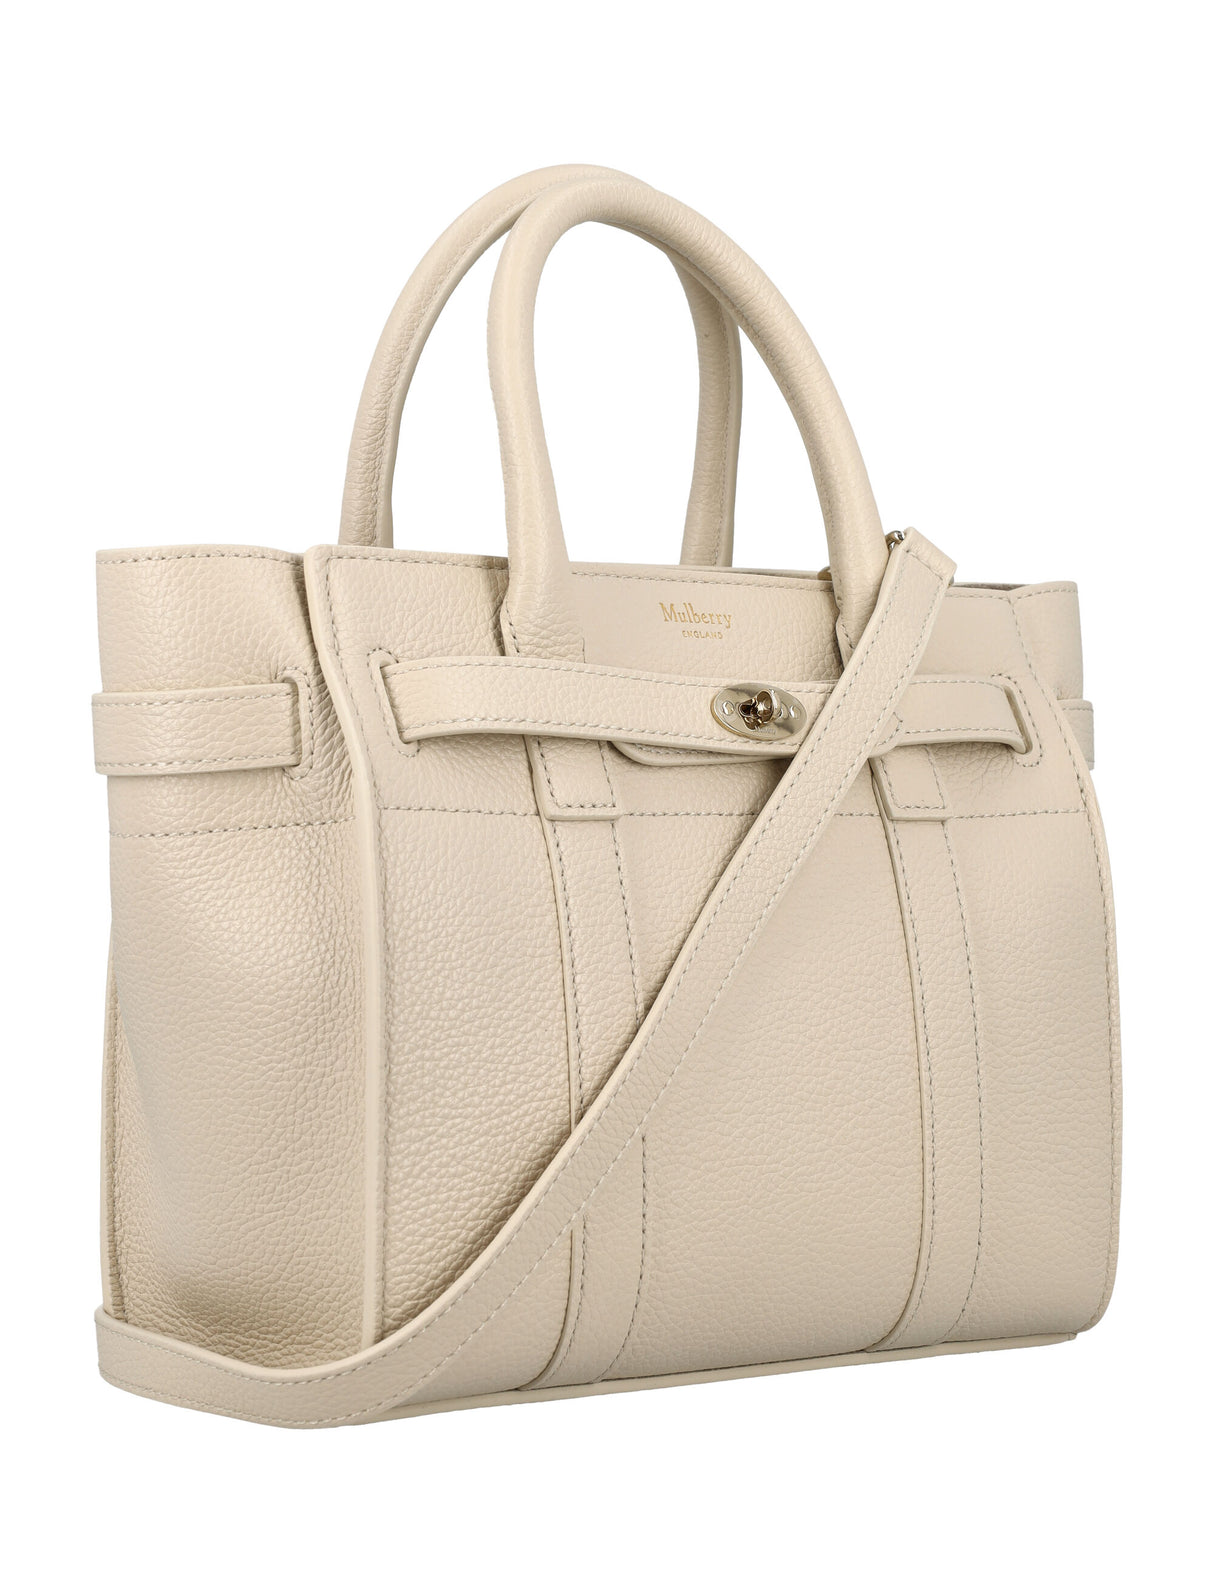 MULBERRY Mini Bayswater Zip Leather Handbag with Detachable Strap - Chalk White, 23cm